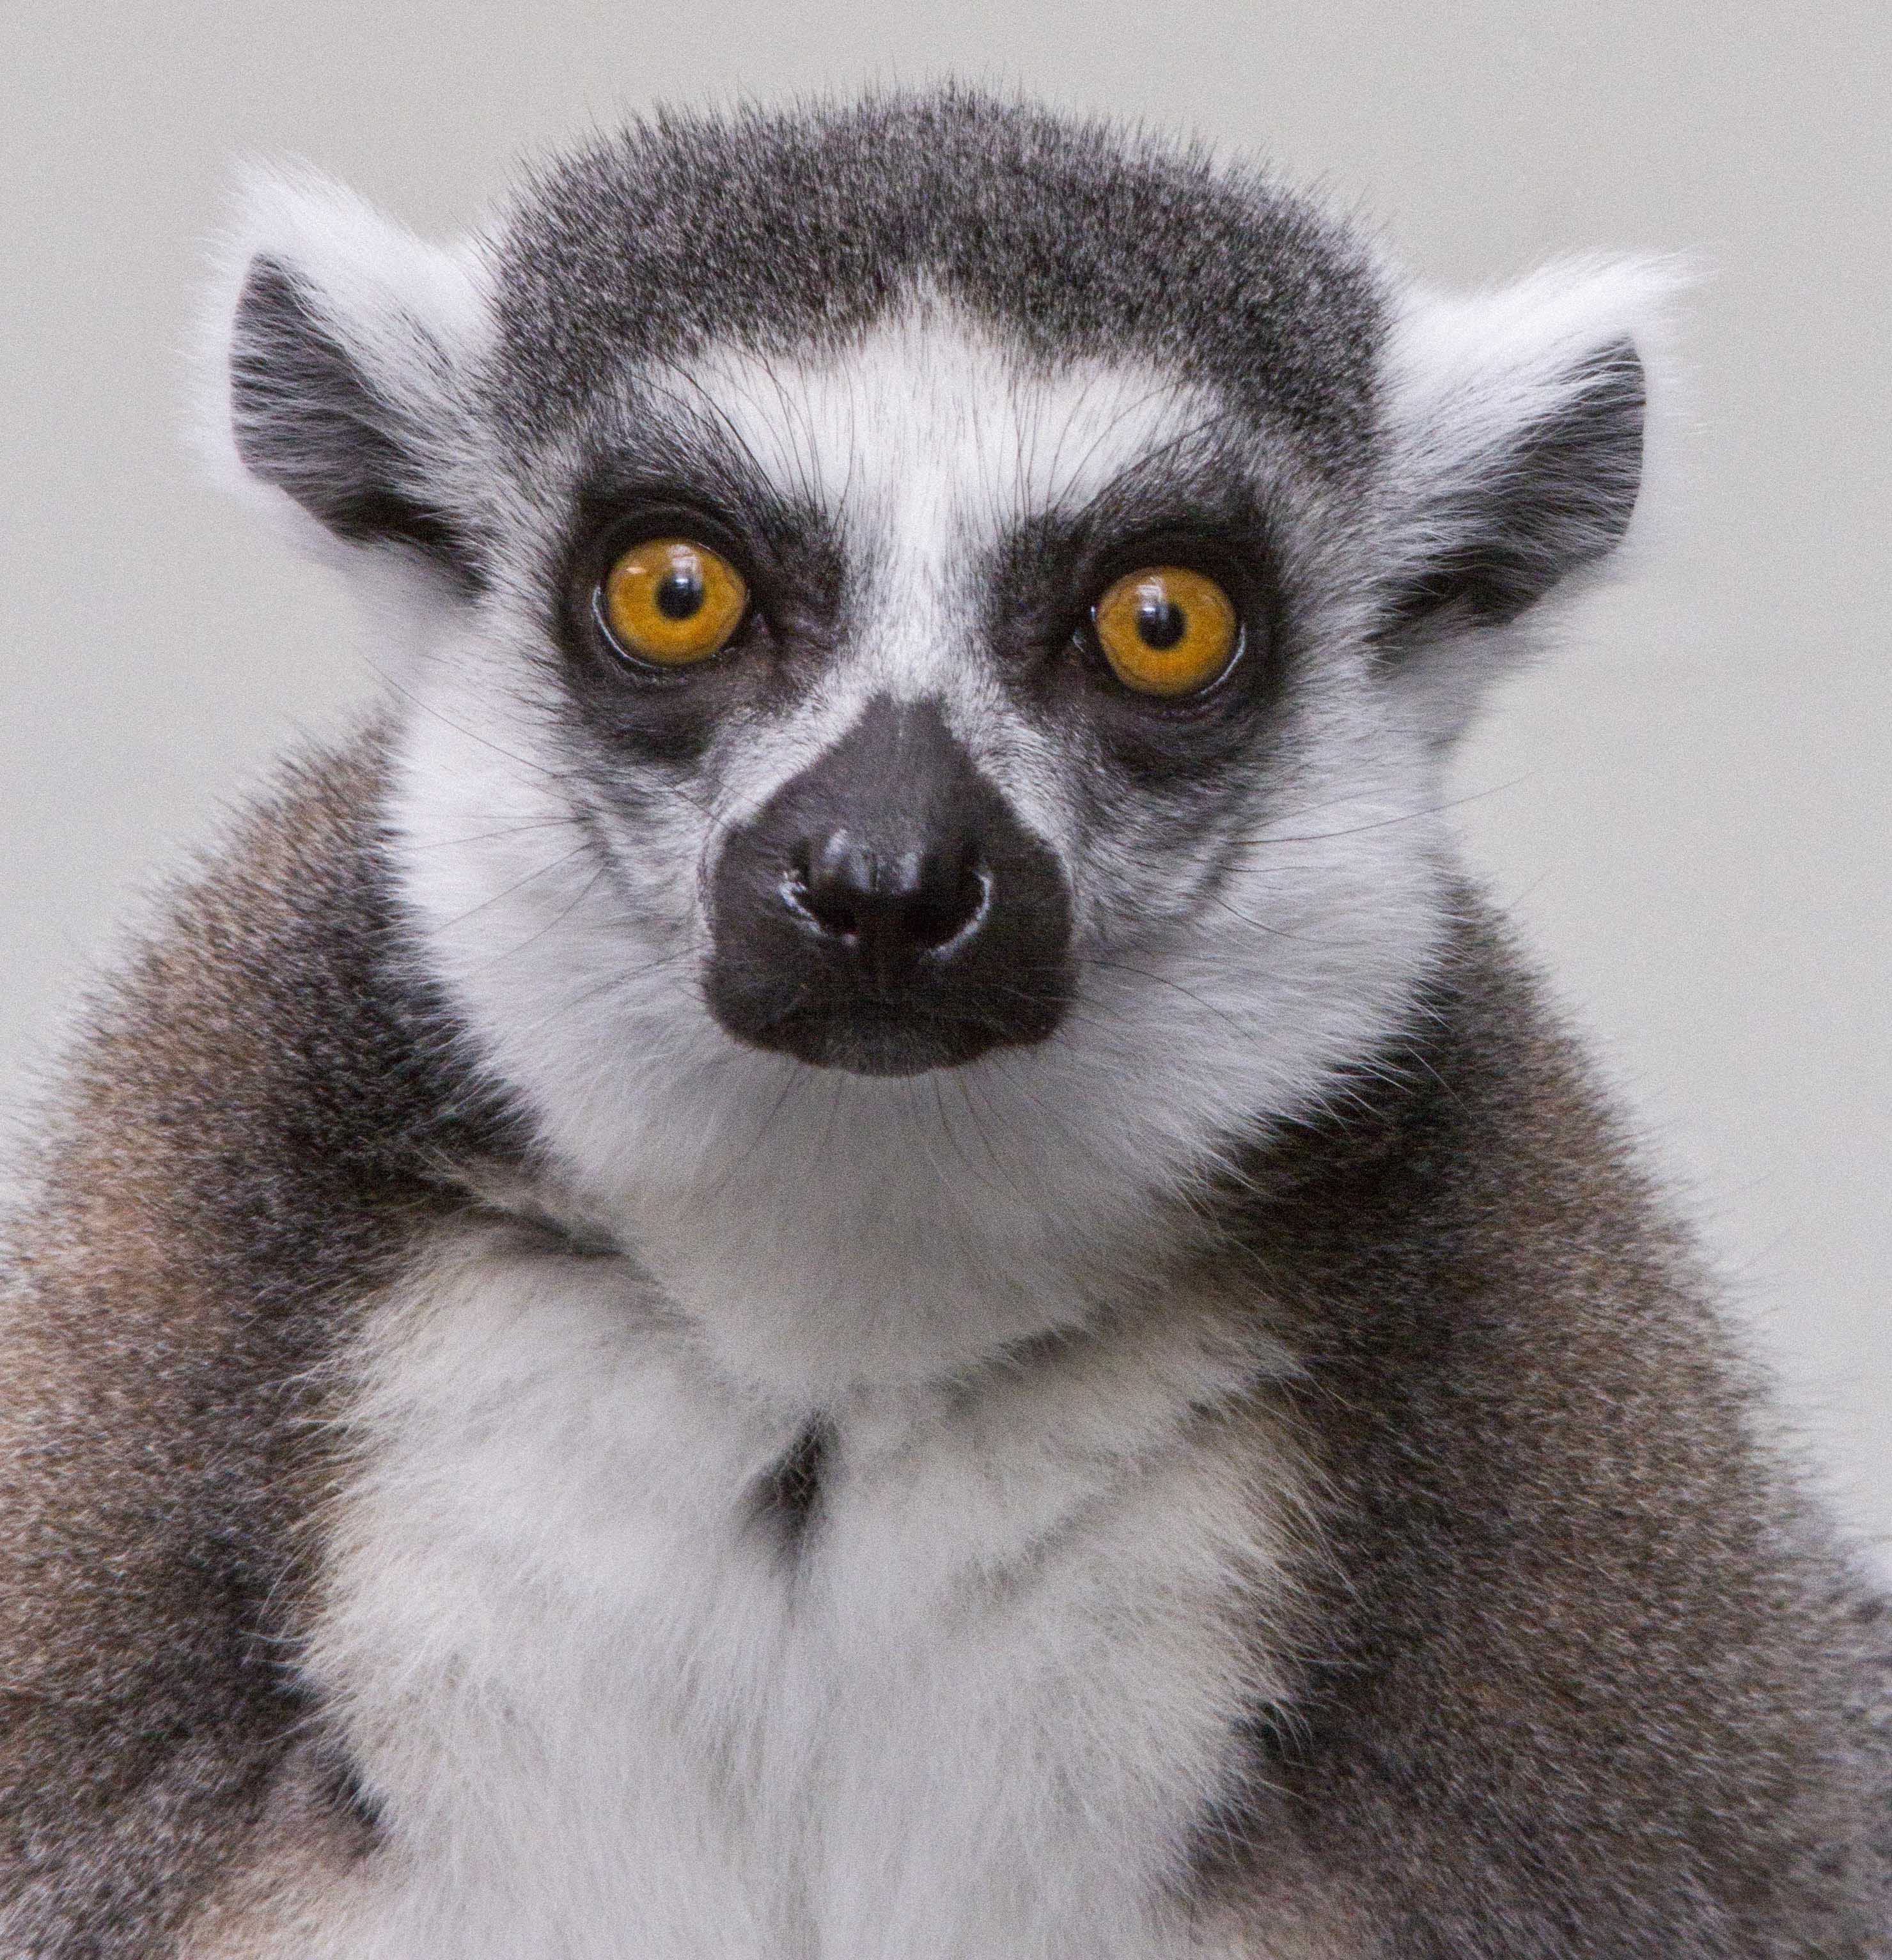 Ring-tailed lemur at the Tennessee Aquarium